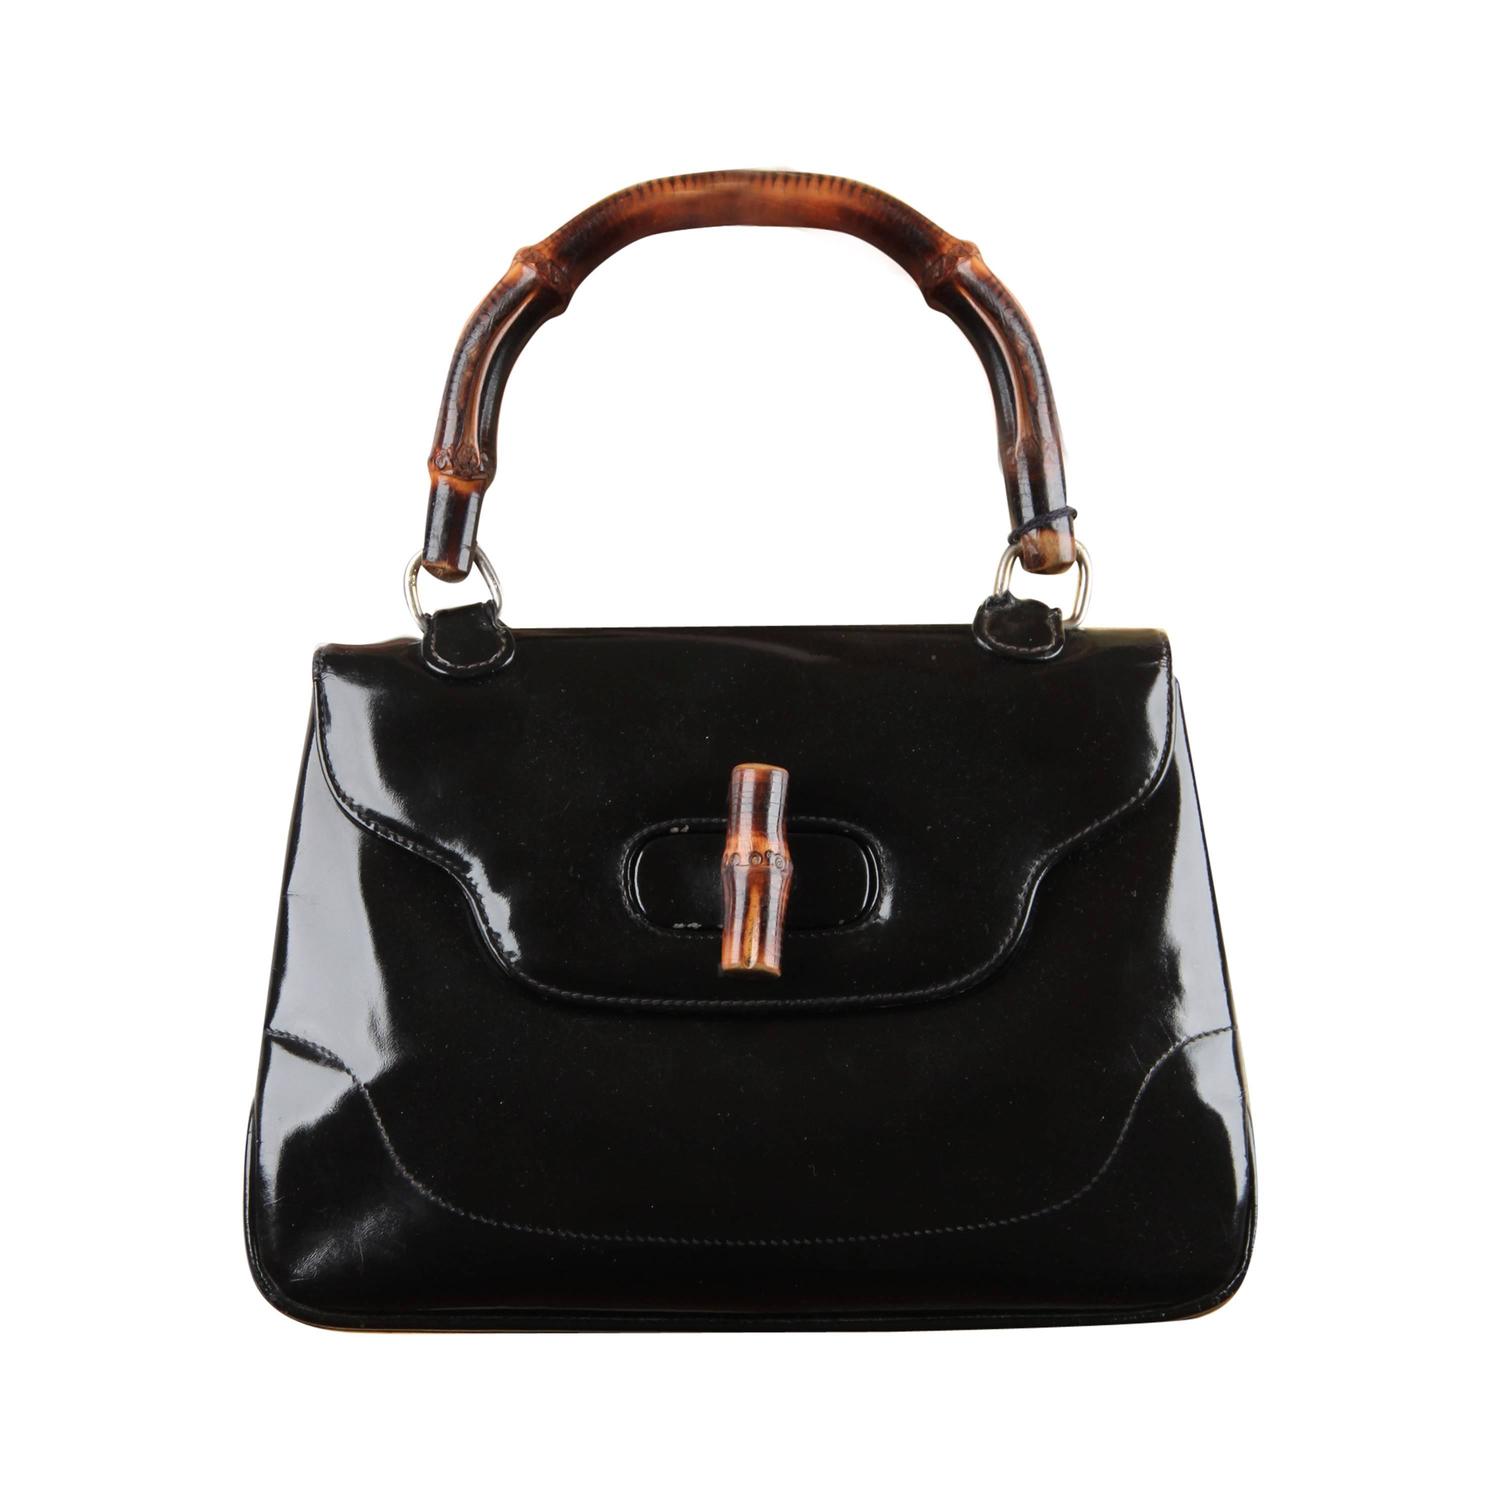 GUCCI Italian VINTAGE Black Patent Leather BAMBOO BAG Handbag PURSE Rare at 1stdibs